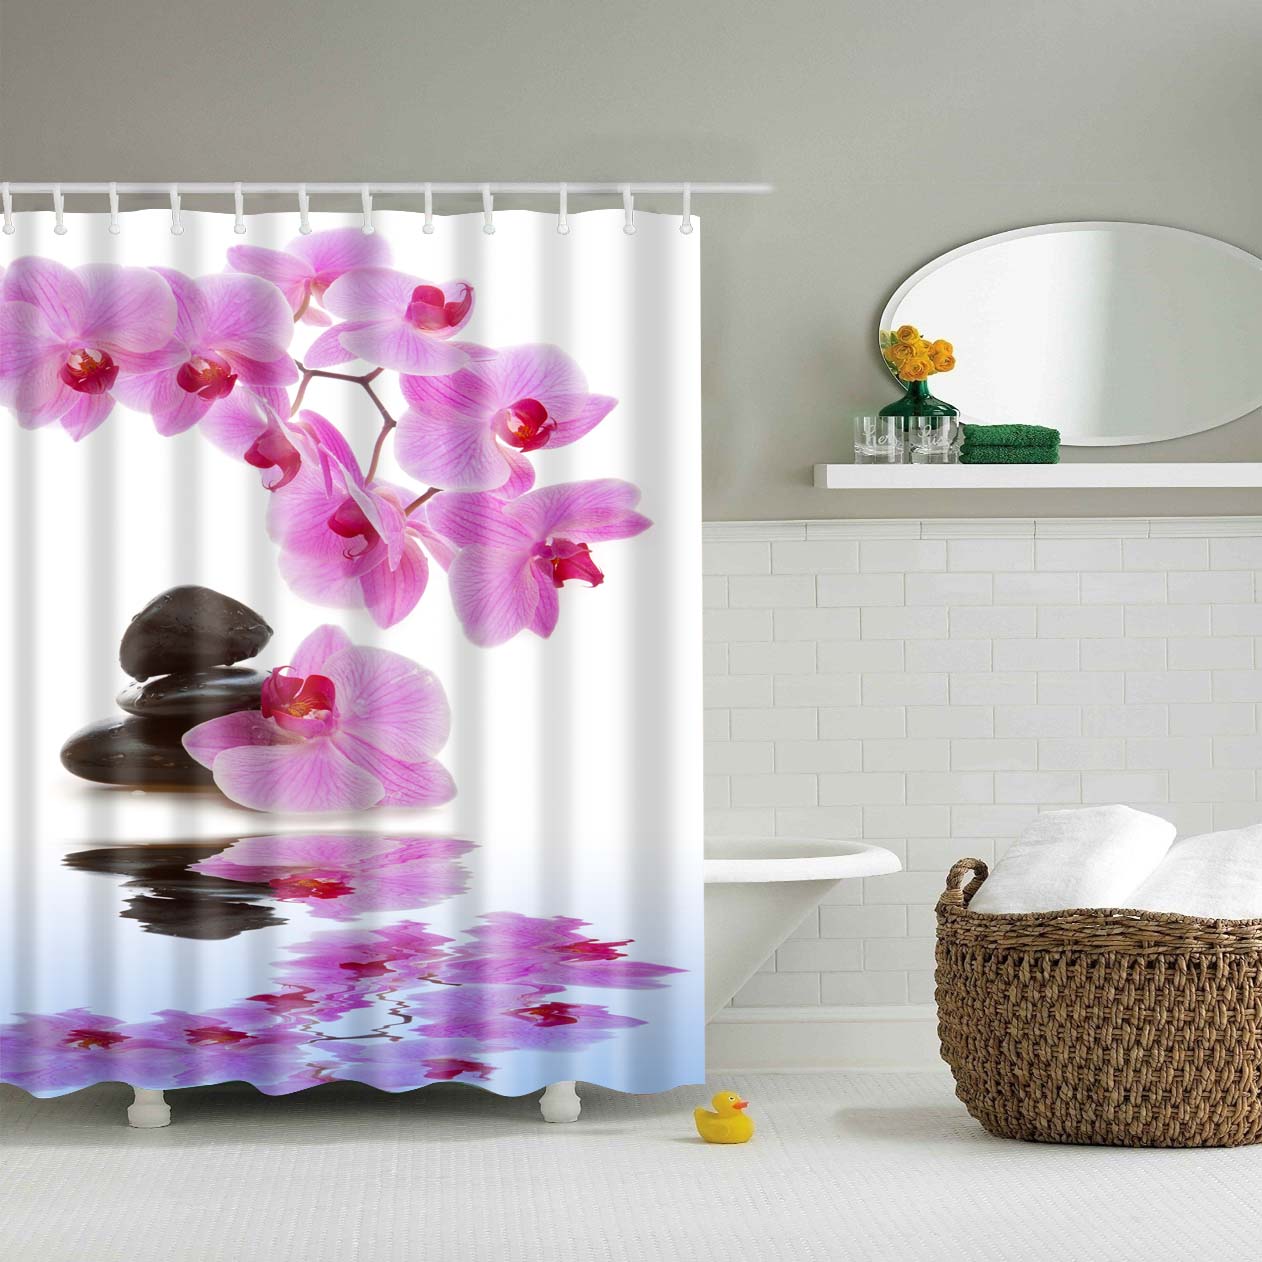 Zen Style Orchids and Stones Pond Shower Curtain Set - 4 Pcs